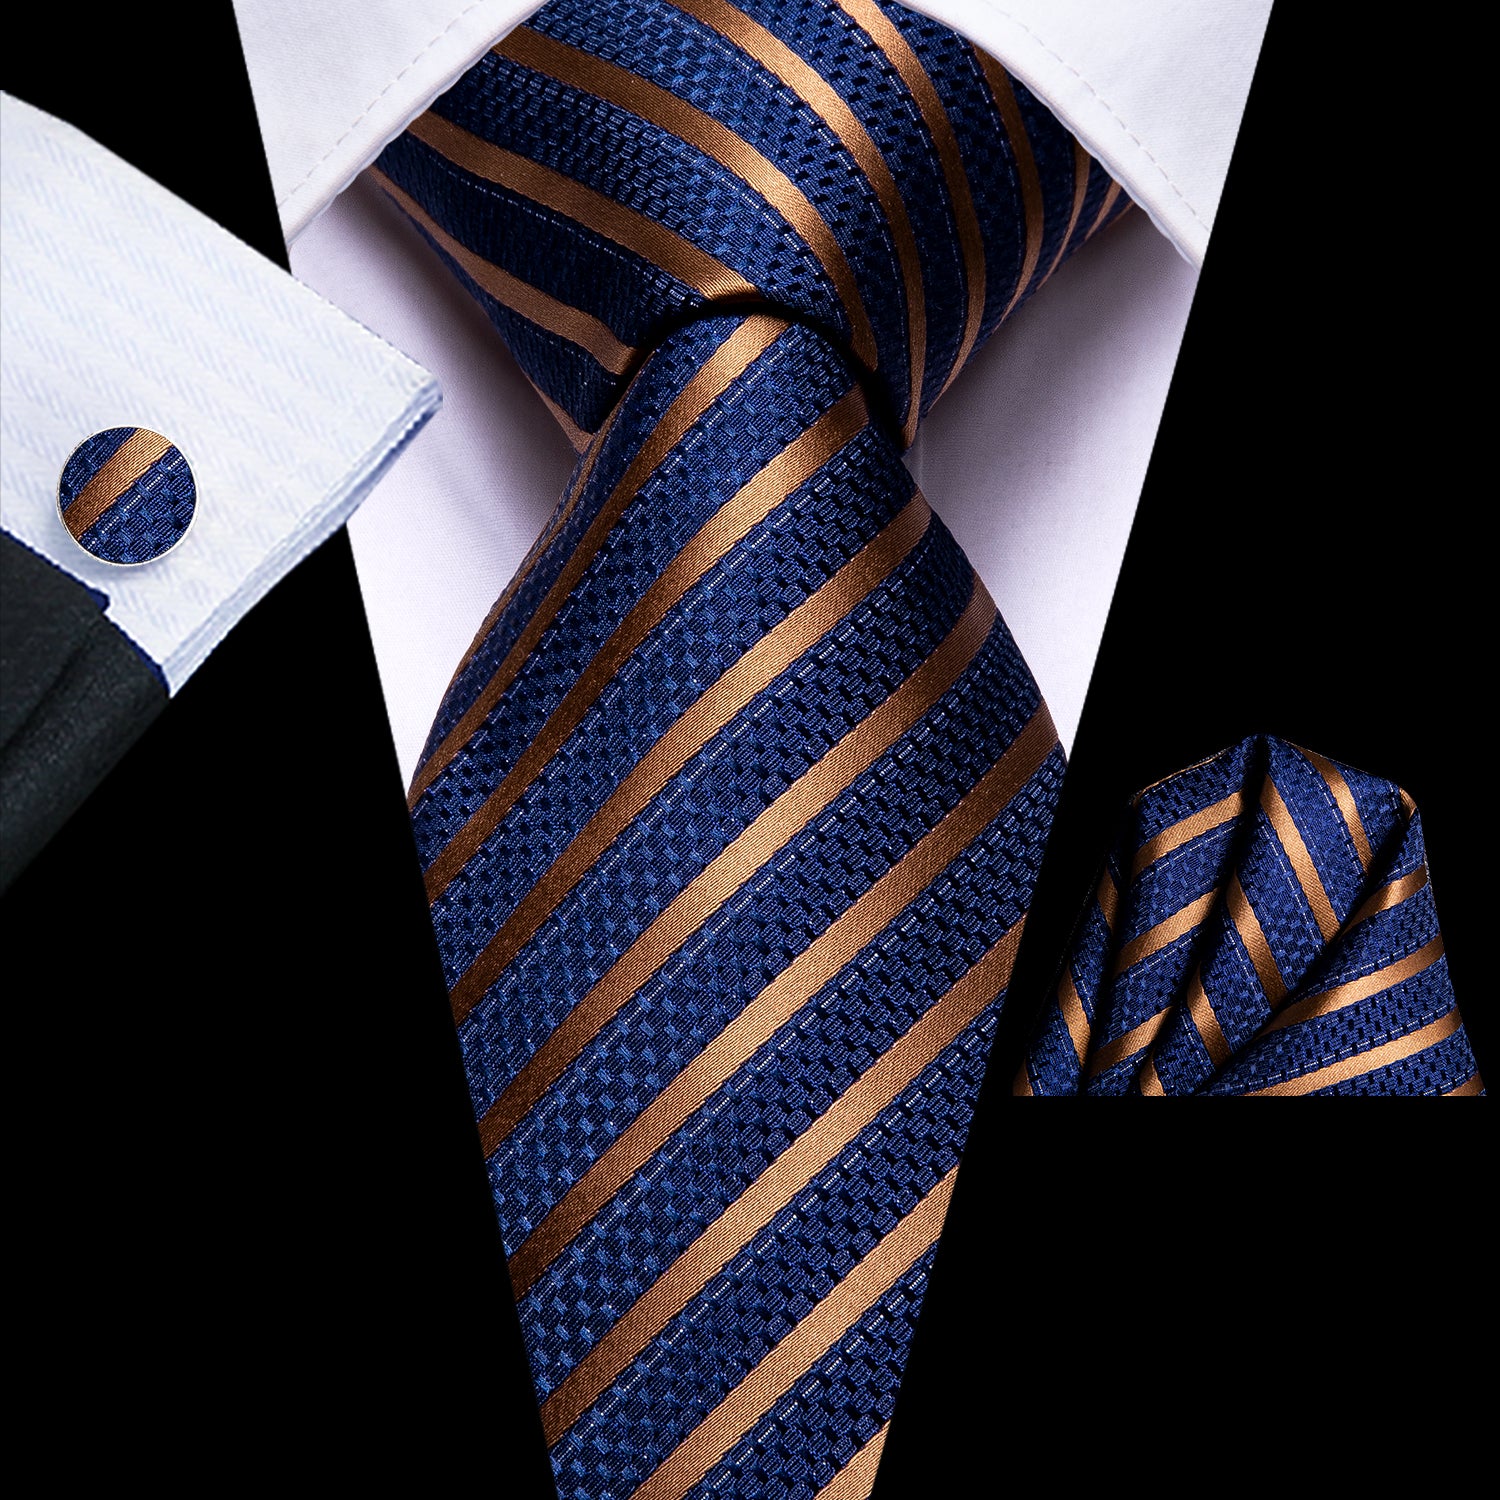 Blue Gold Striped Tie Pocket Square Cufflinks Set